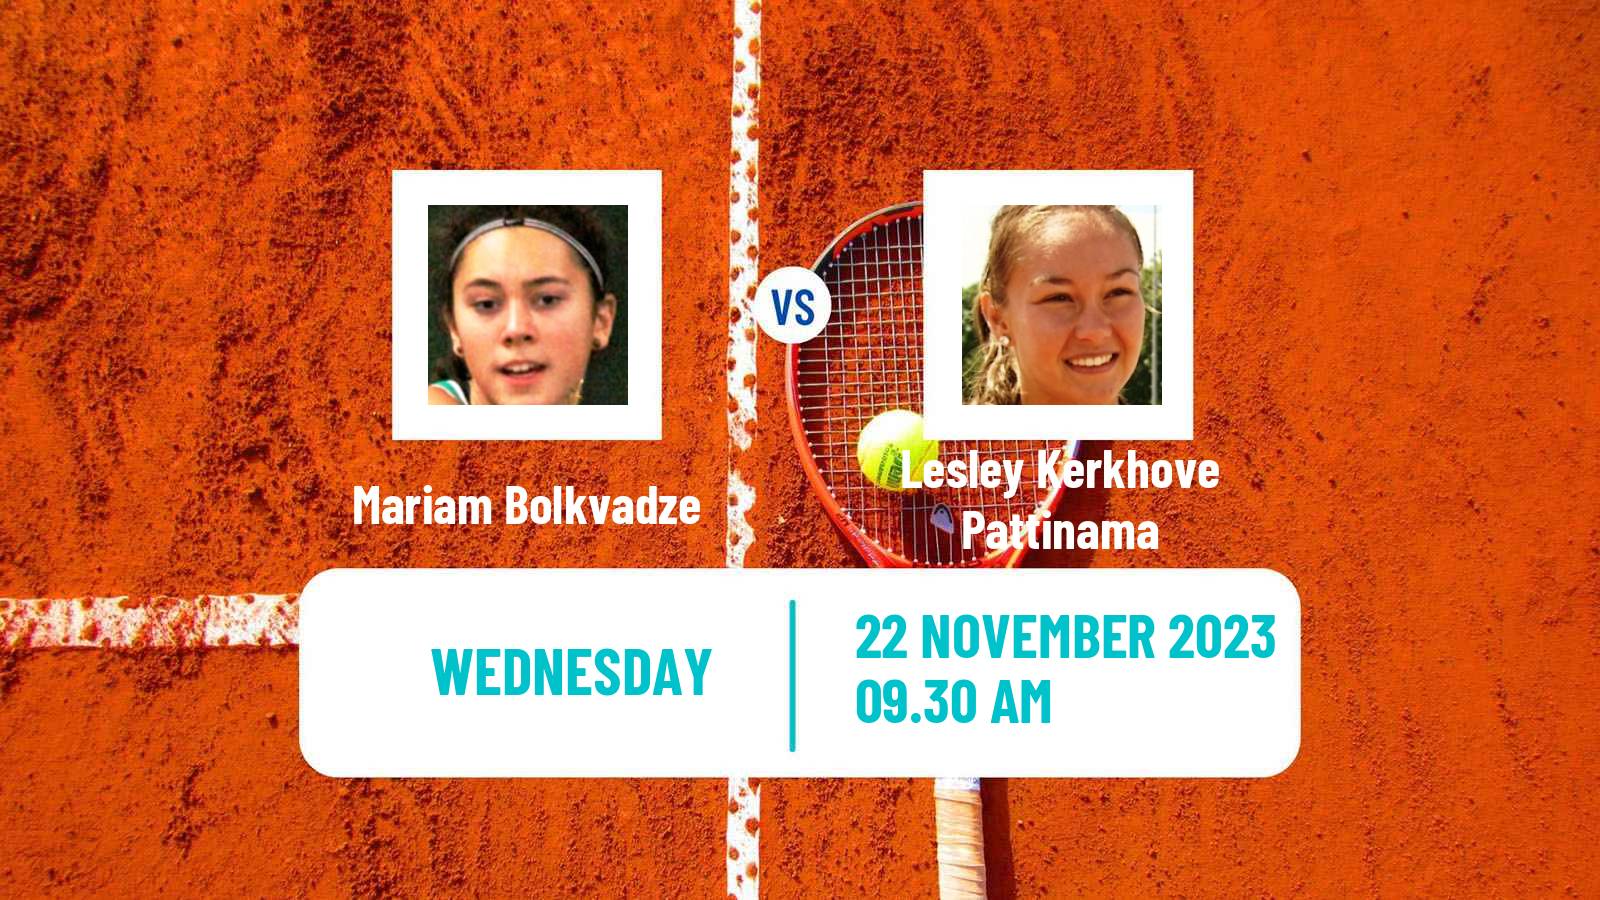 Tennis ITF W25 Lousada Women Mariam Bolkvadze - Lesley Kerkhove Pattinama